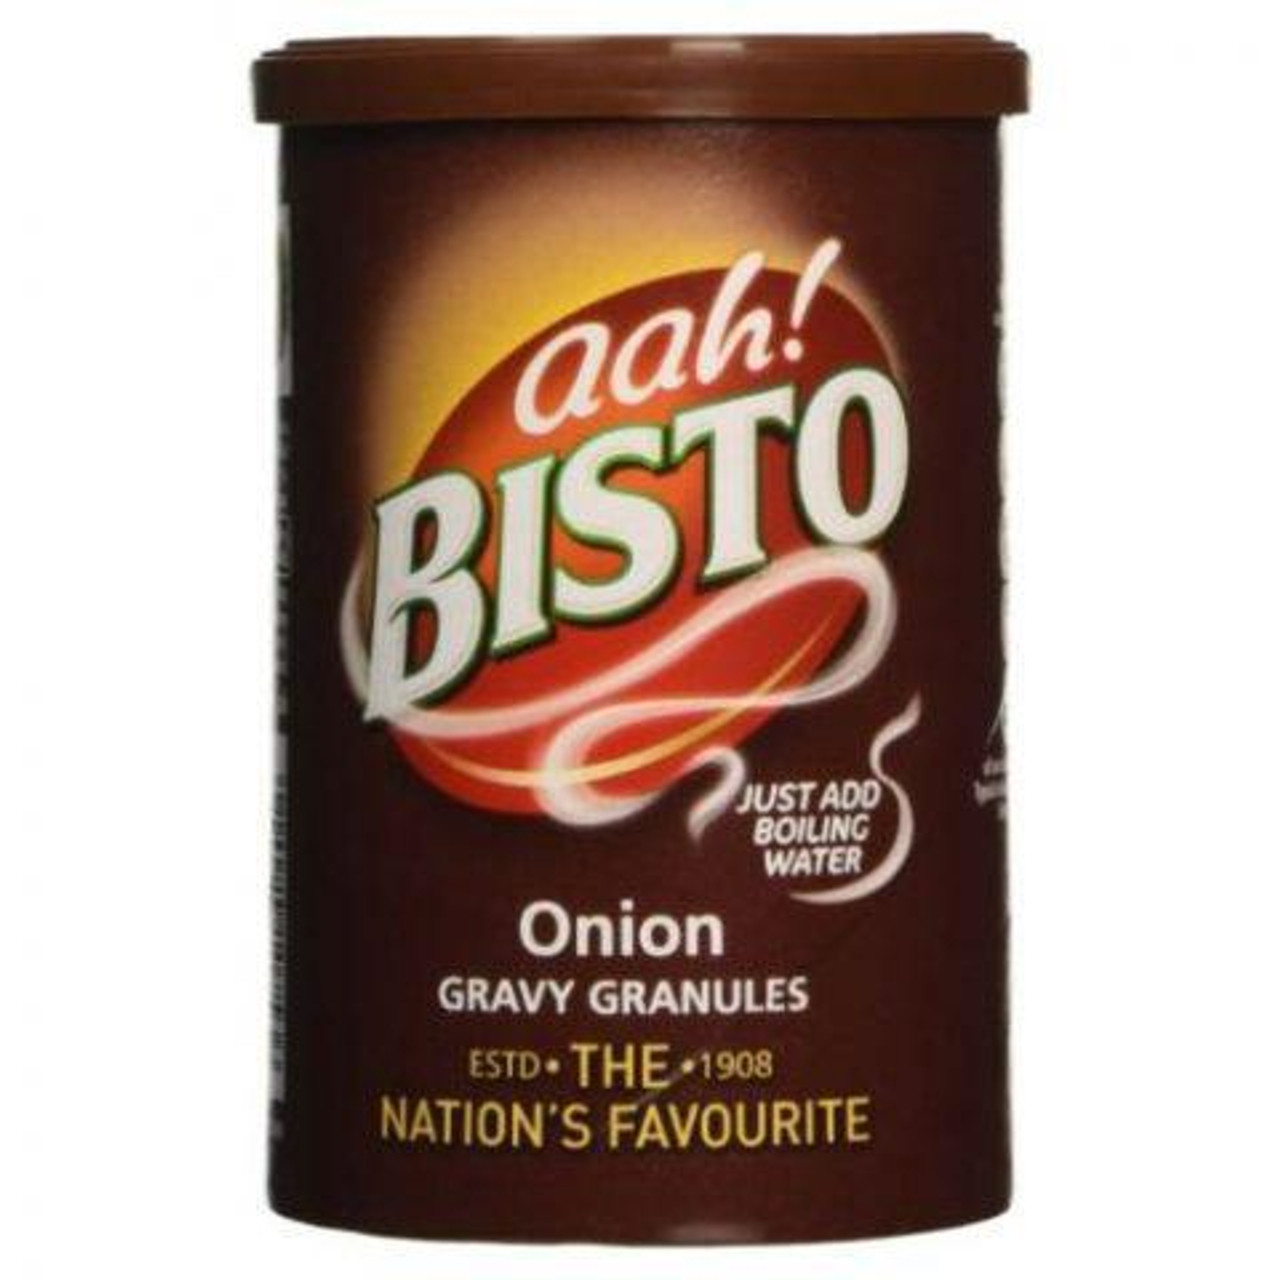 Bisto Gravy Granules - Onion, 190g